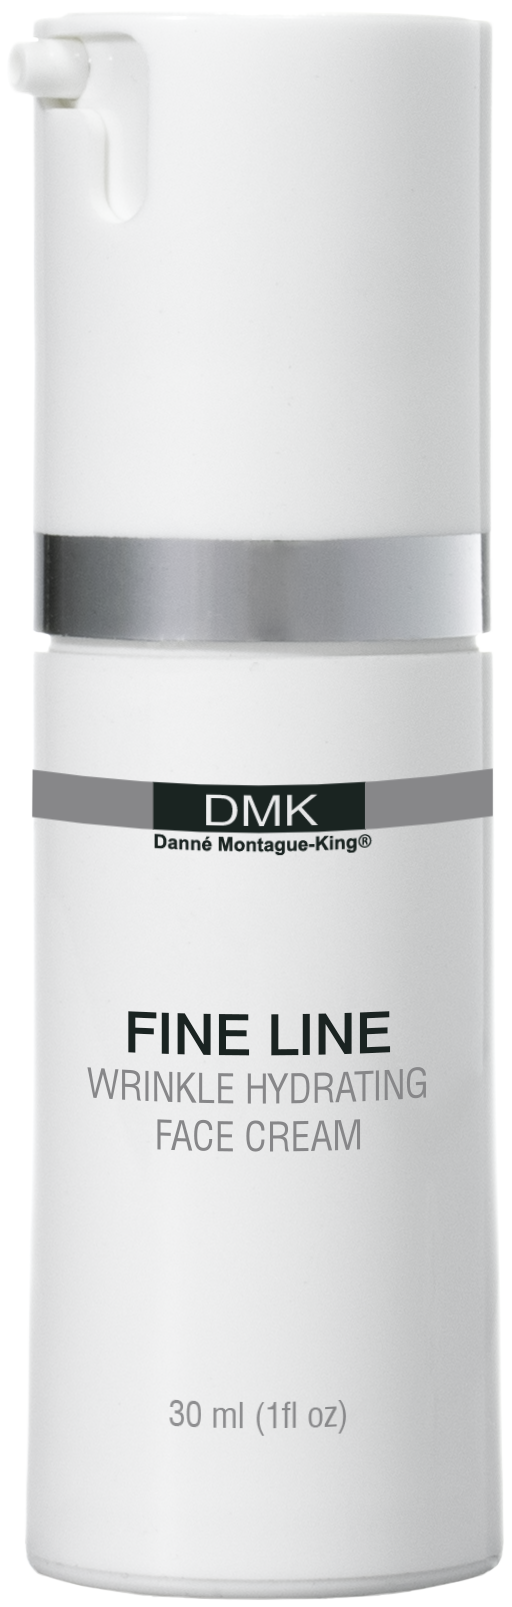 DMK Fine Line - Satori Fiori Skin Care